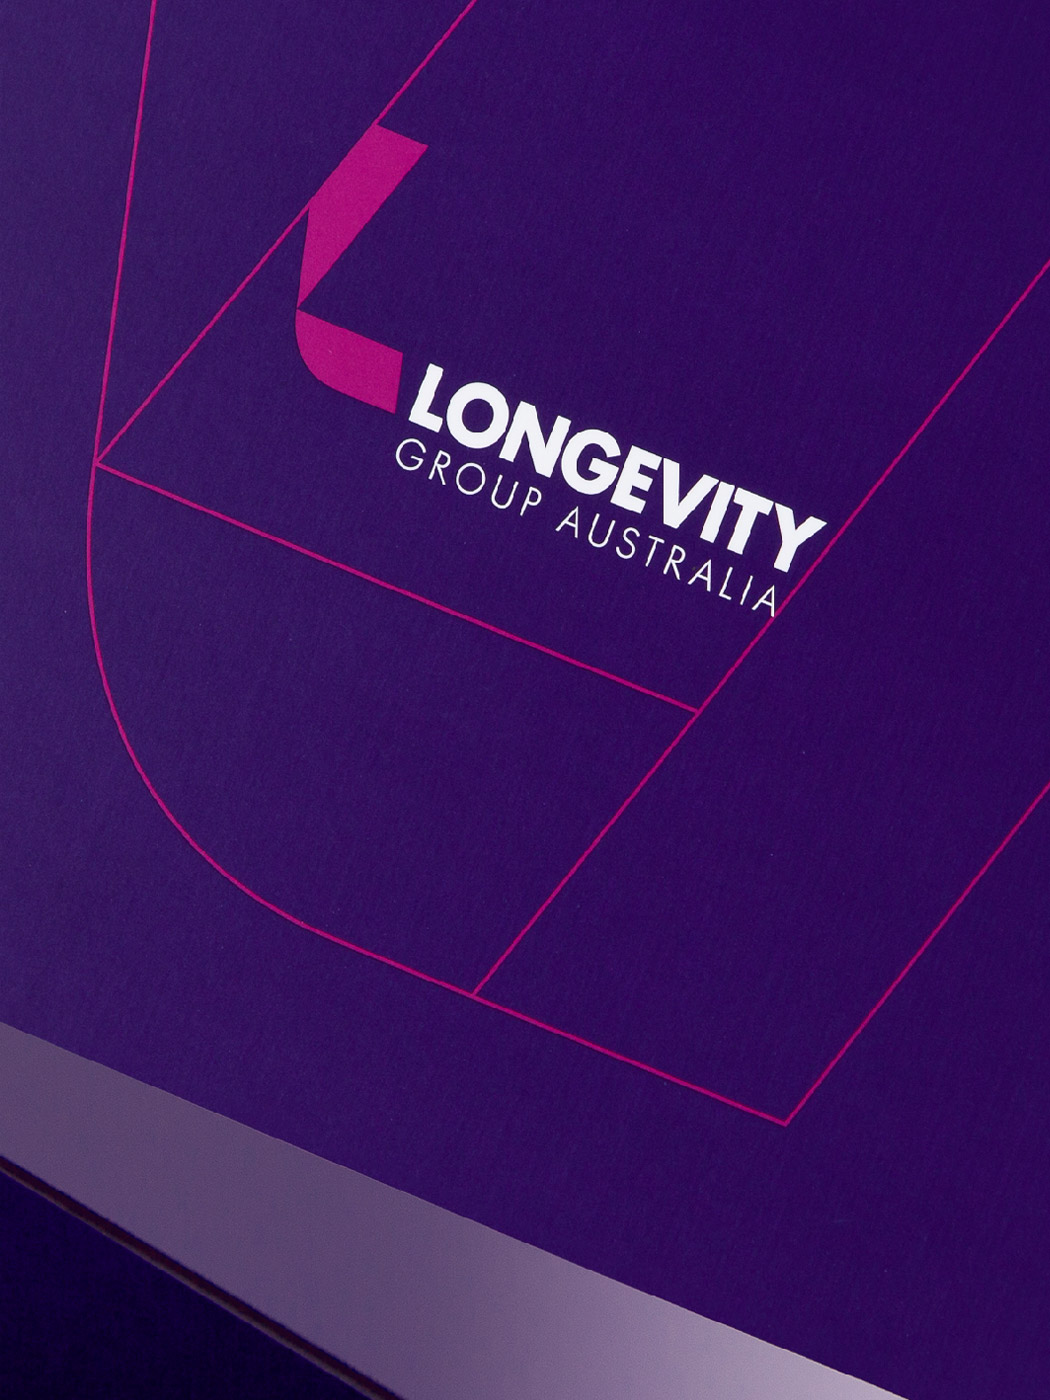 Longevity Group Australia Brand Identity